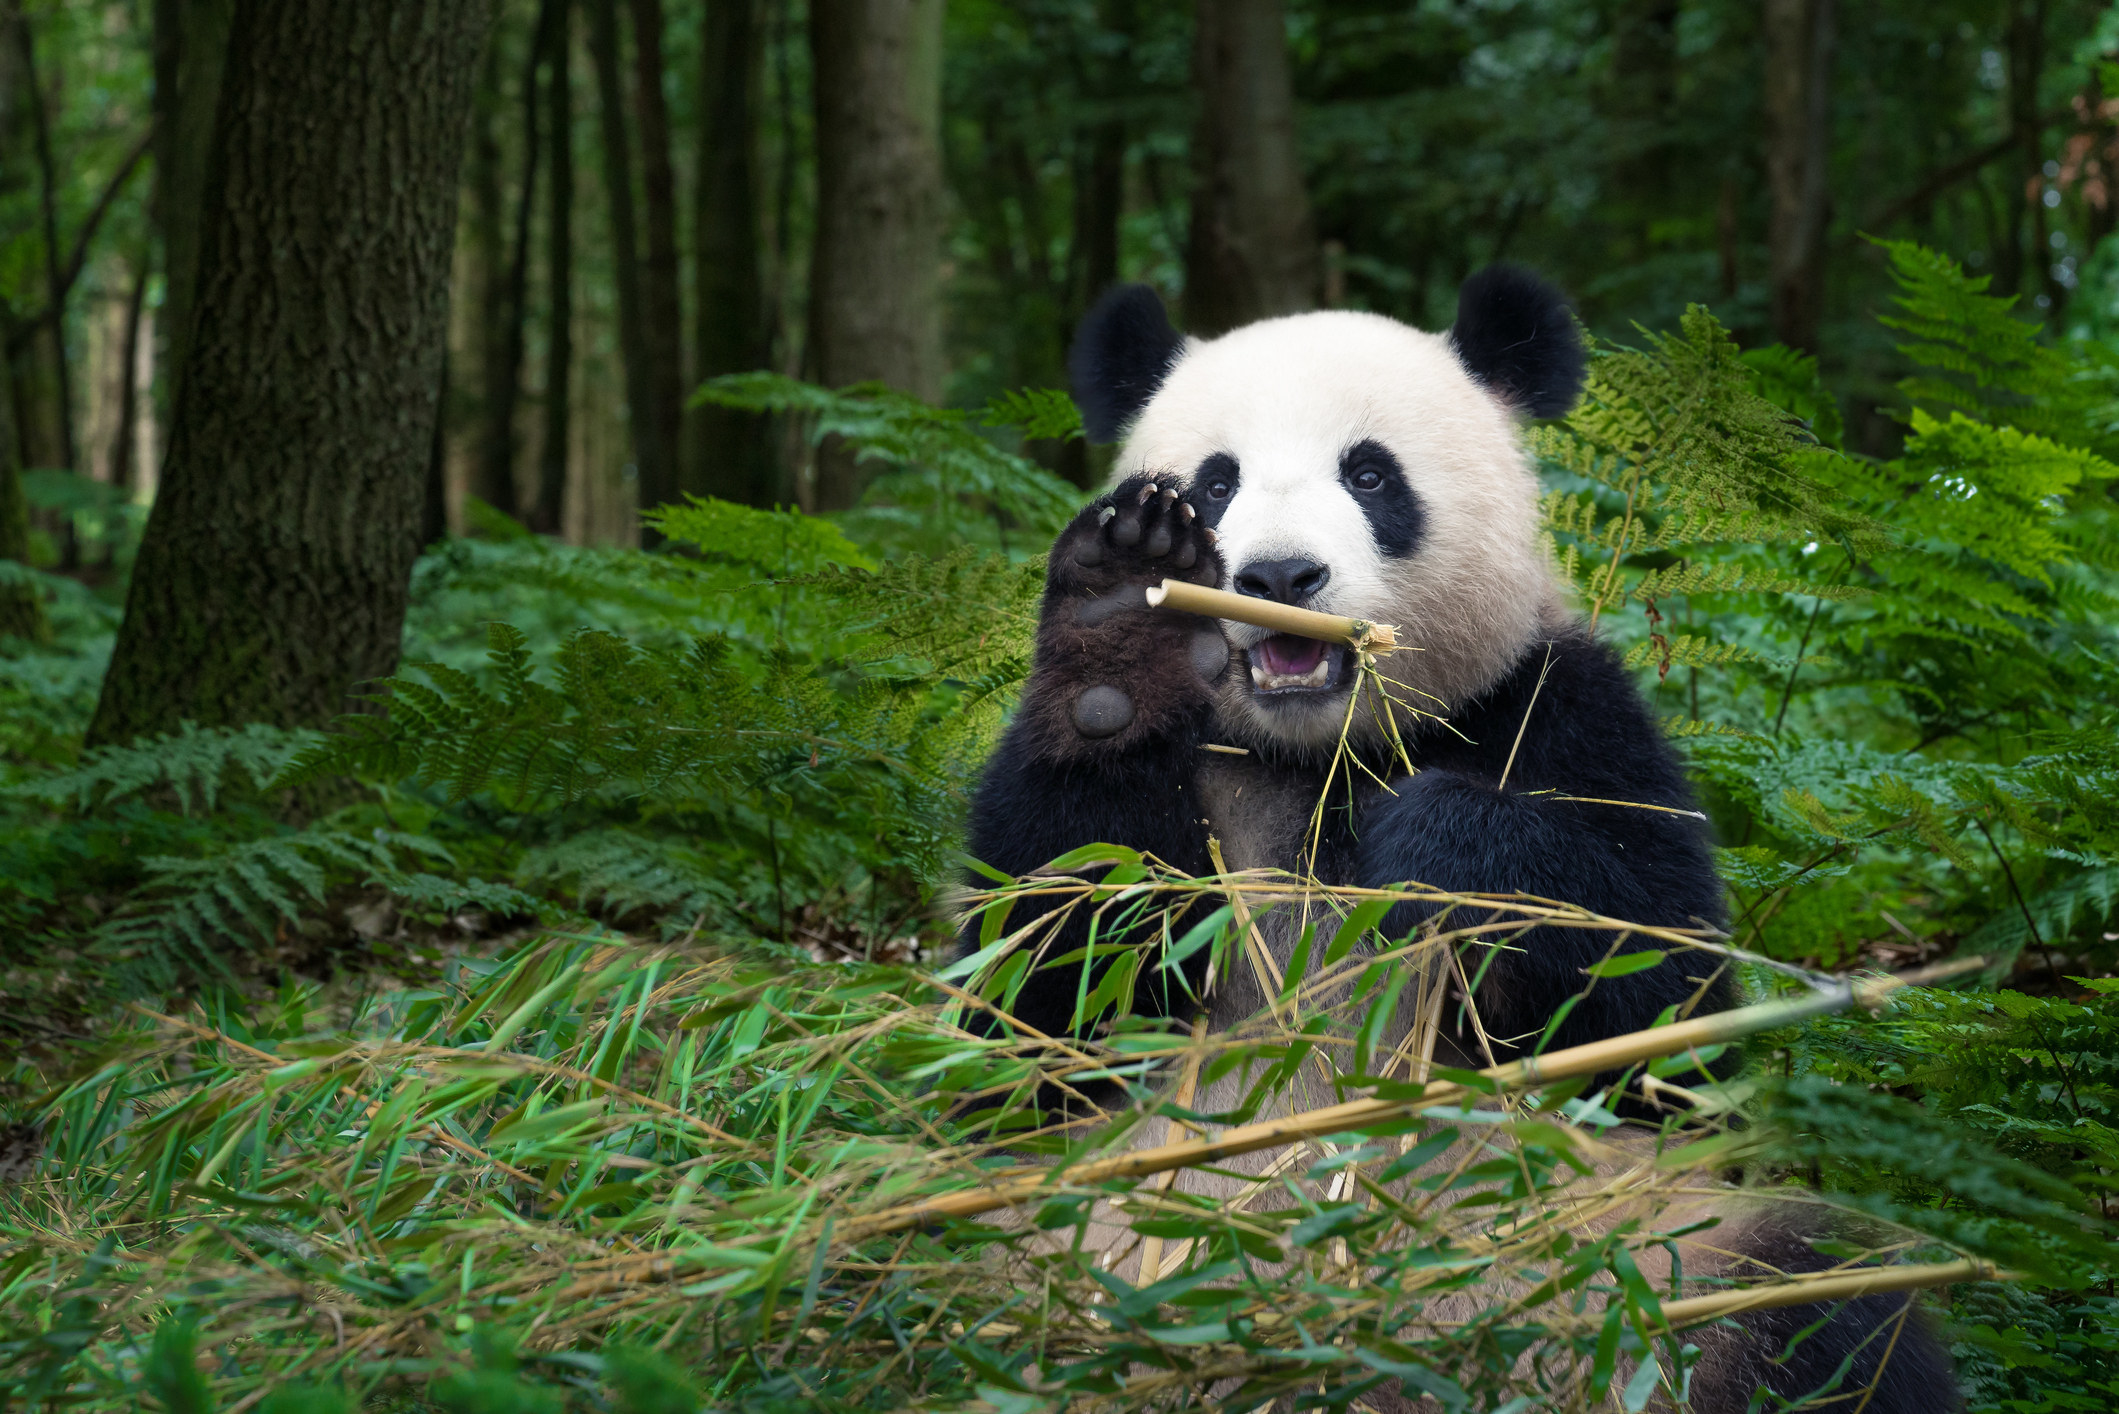 Panda eating bamboo. 